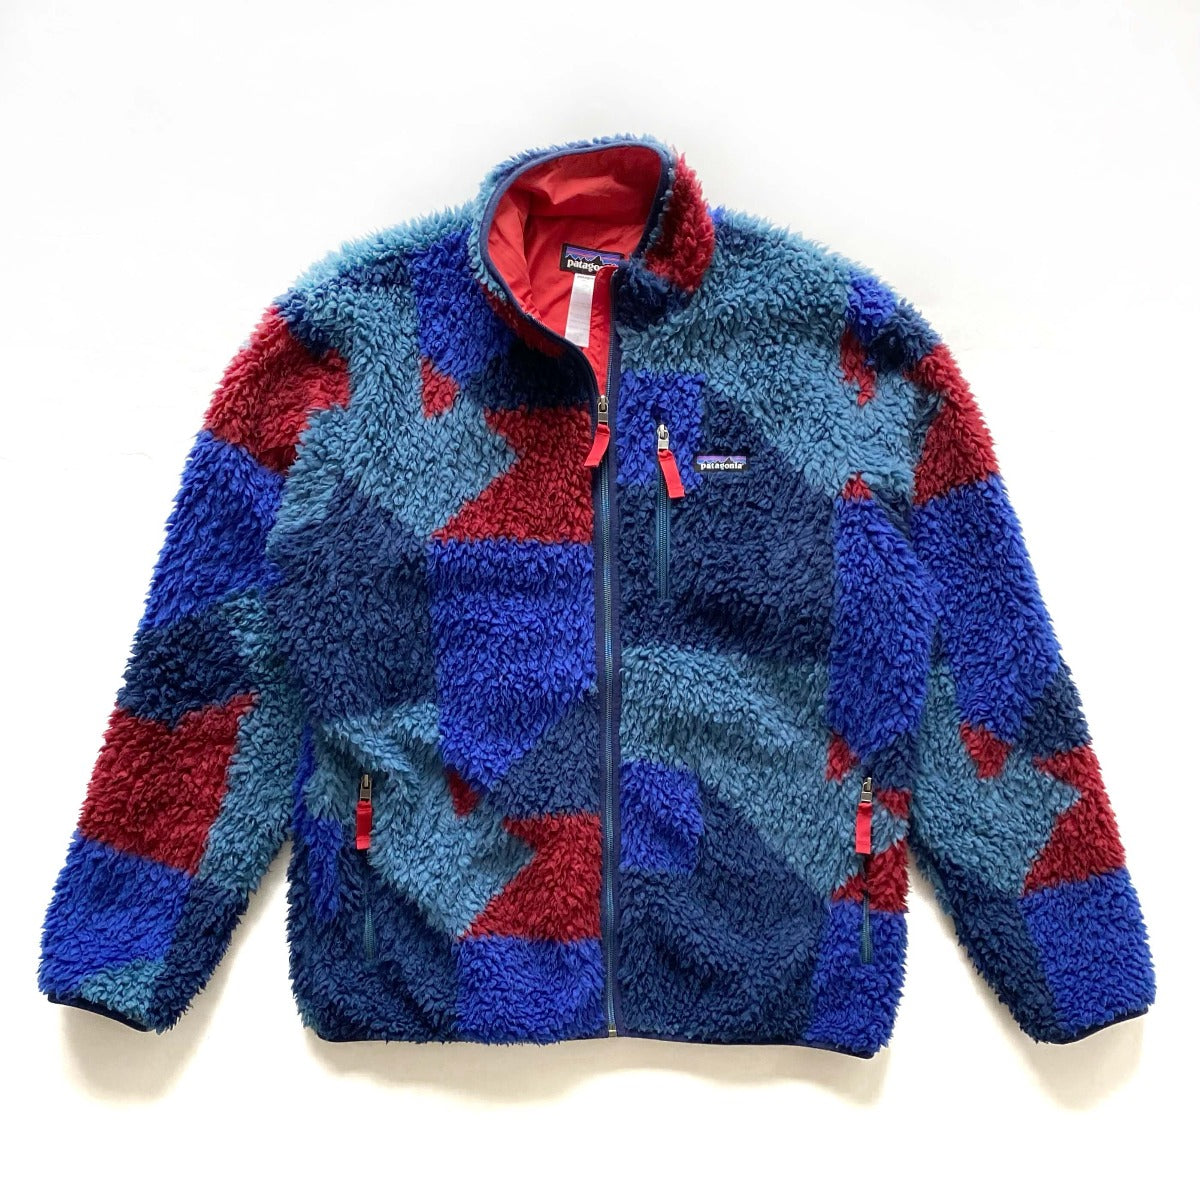 Patagonia Fall ‘14 Deep Pile Blocks Glass Retro X Fleece Cardigan Jacket